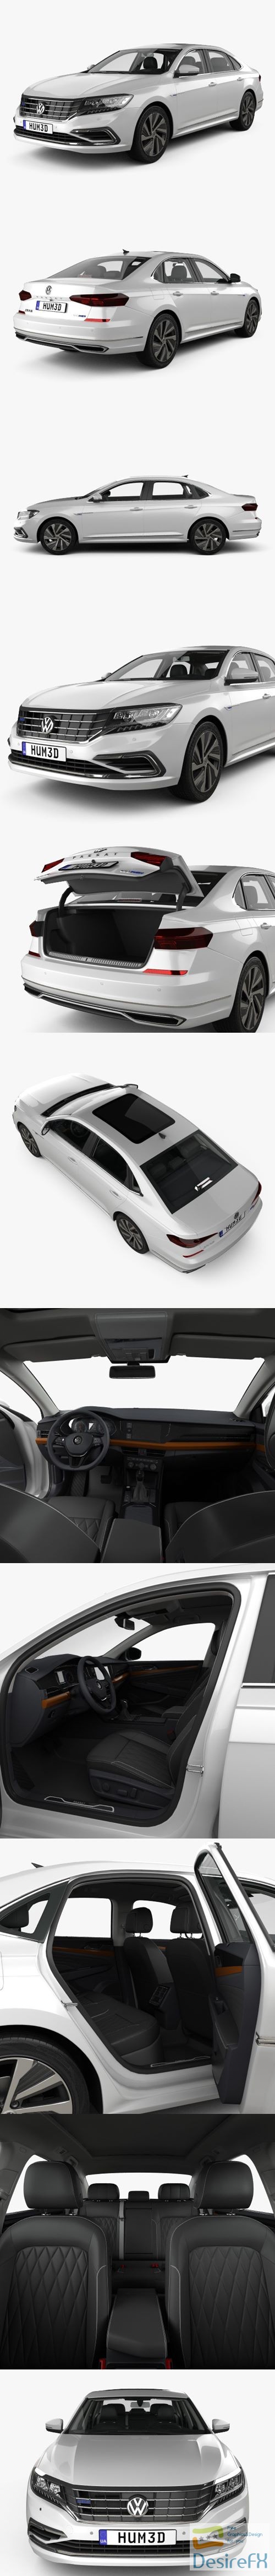 Volkswagen Passat PHEV CN-spec with HQ interior 2019 3D Model